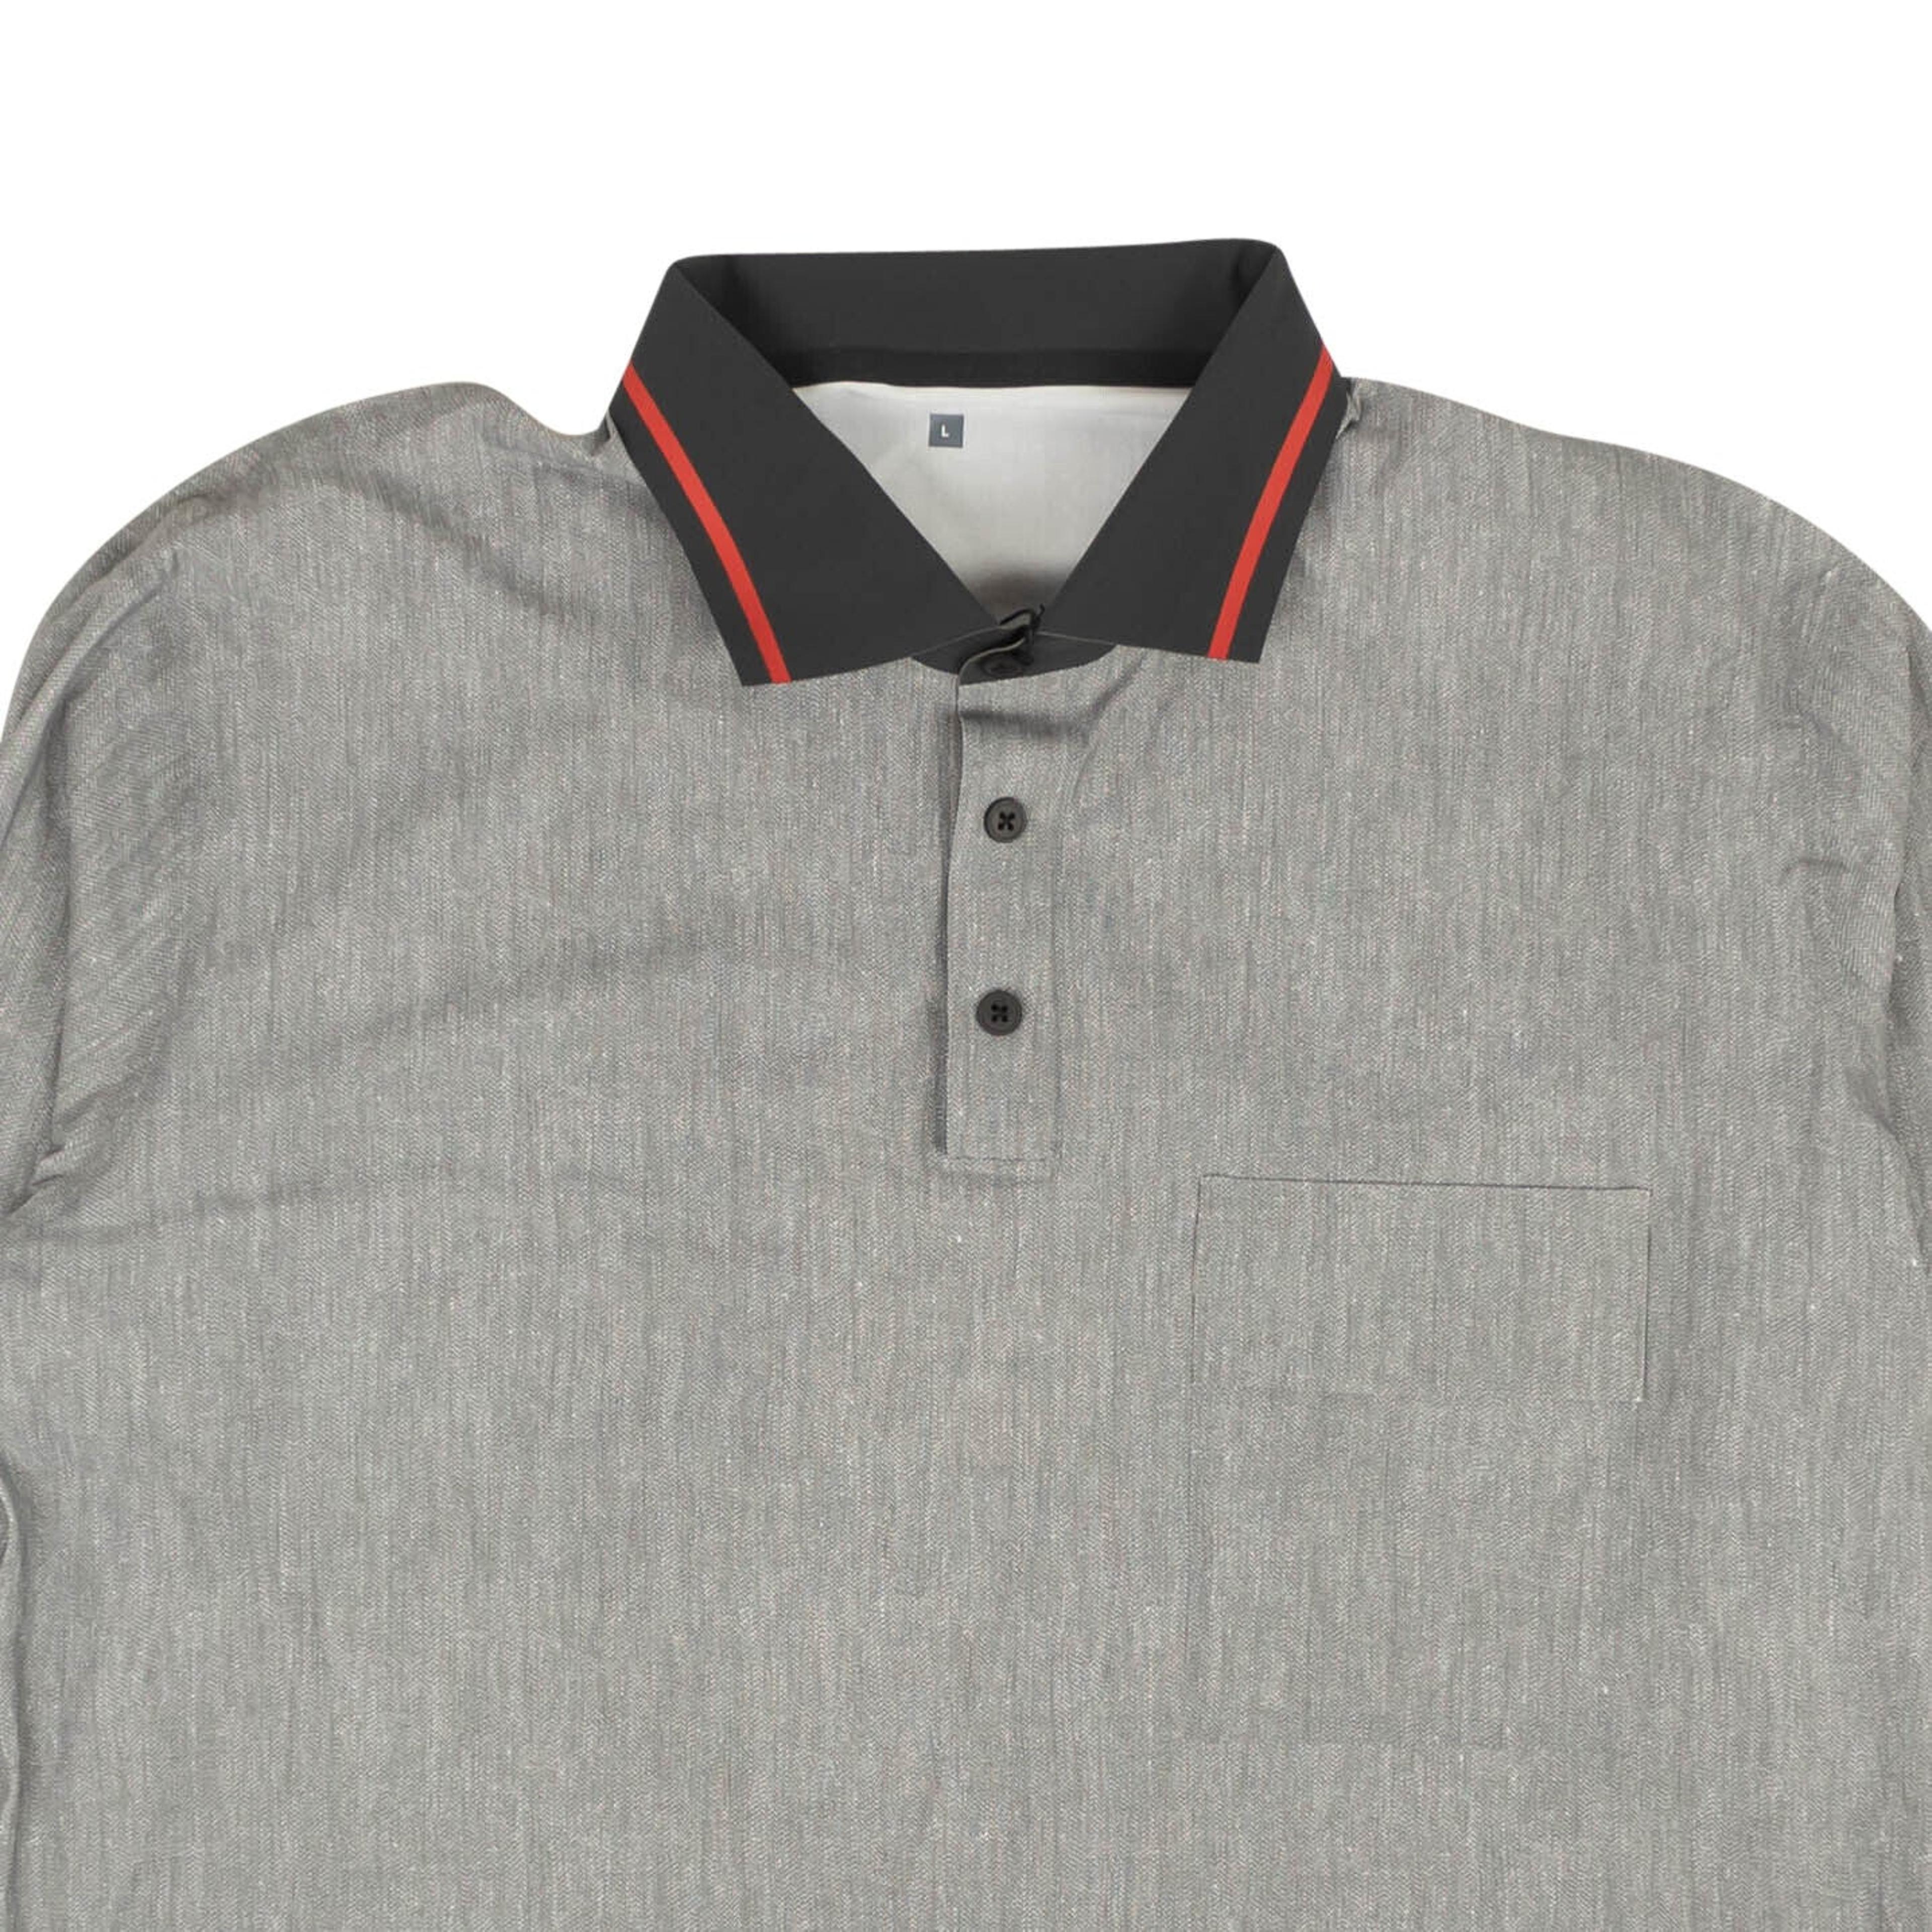 Alternate View 1 of Grey Imitation Taped Polo Shirt